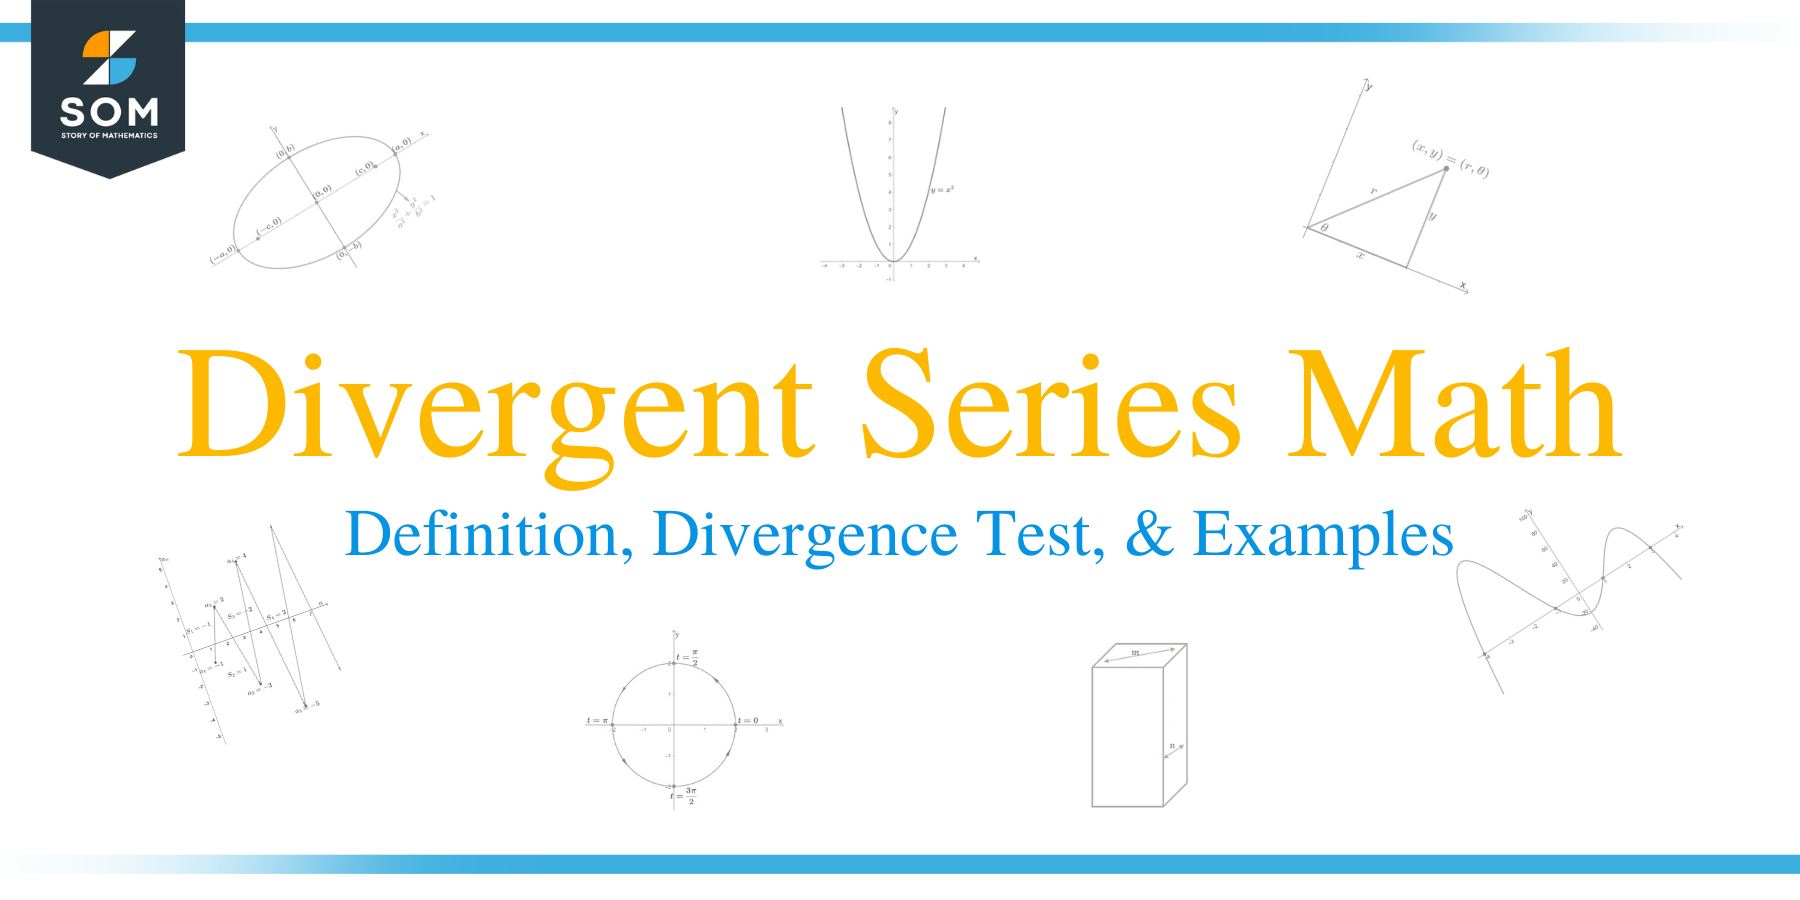 Divergent series math